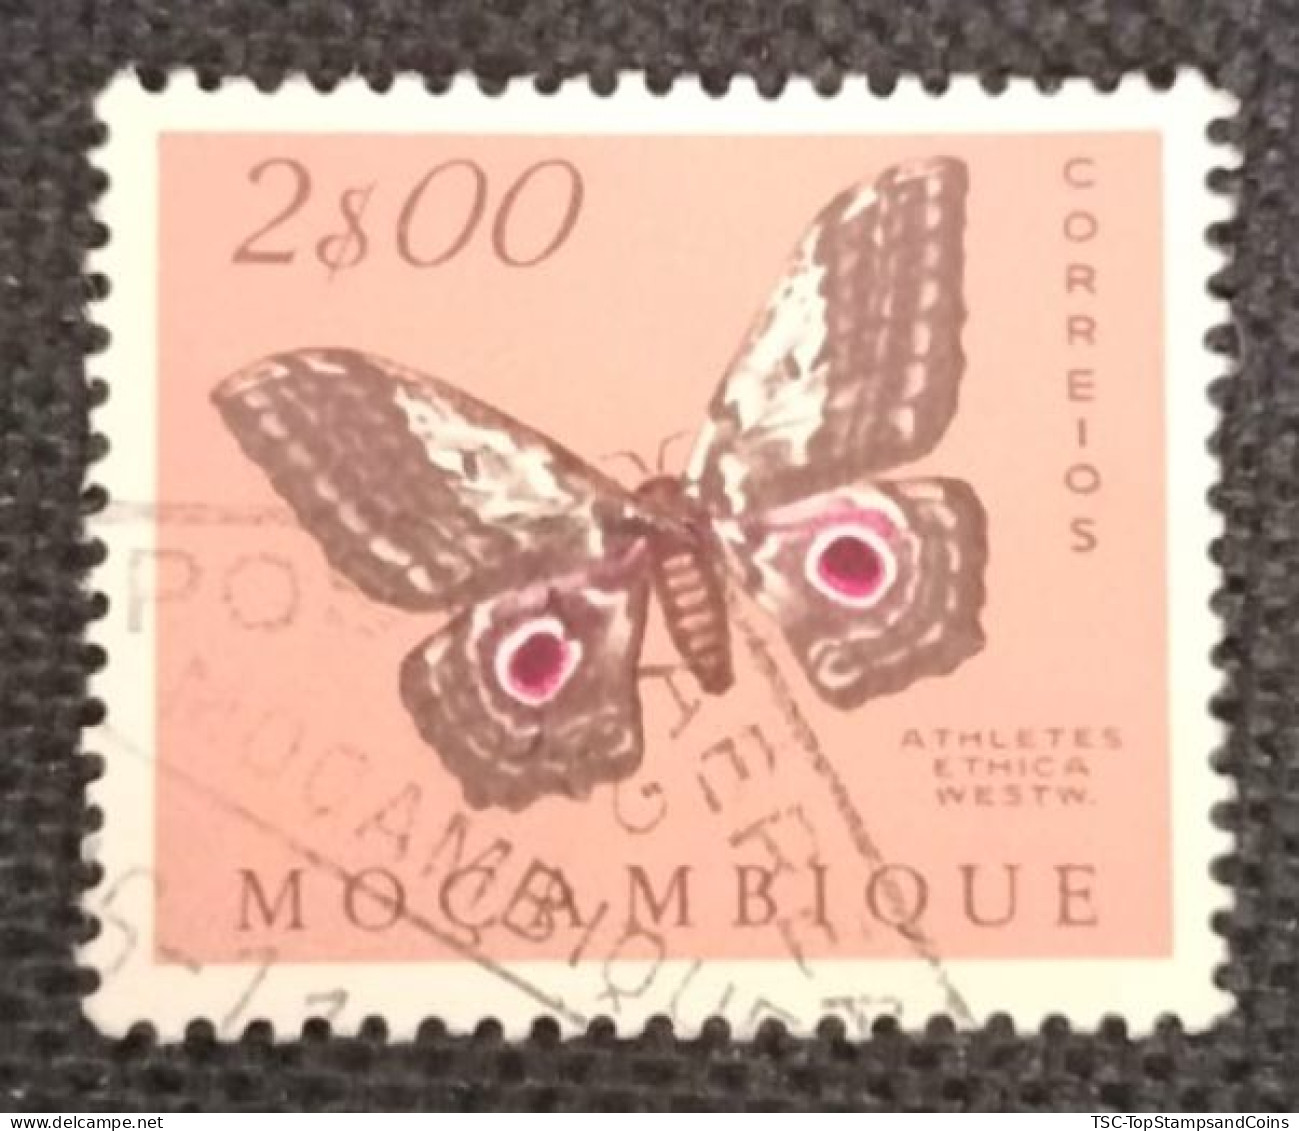 MOZPO0397UA - Mozambique Butterflies  - 2$00 Used Stamp - Mozambique - 1953 - Mozambique